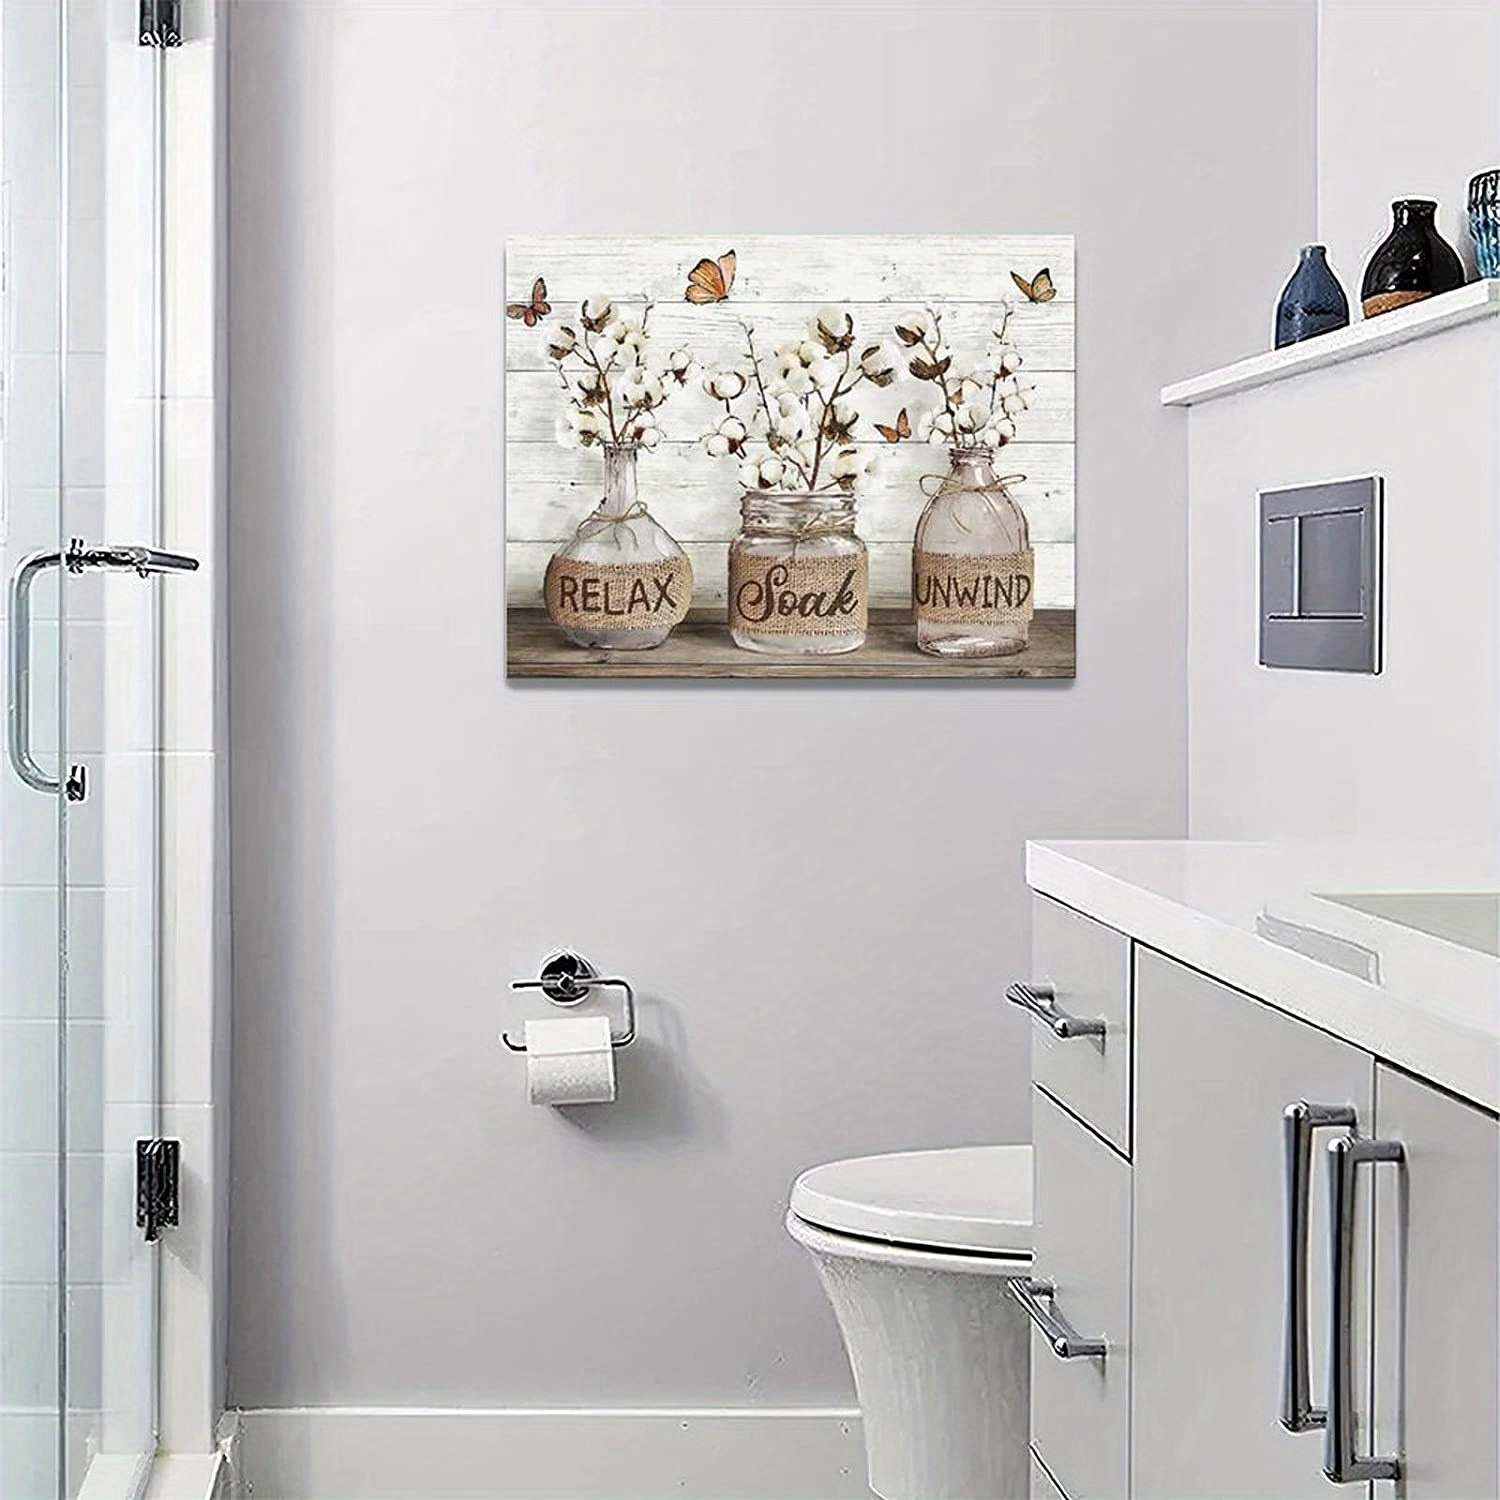 28 Examples of Stylish Bathroom Wall Decor